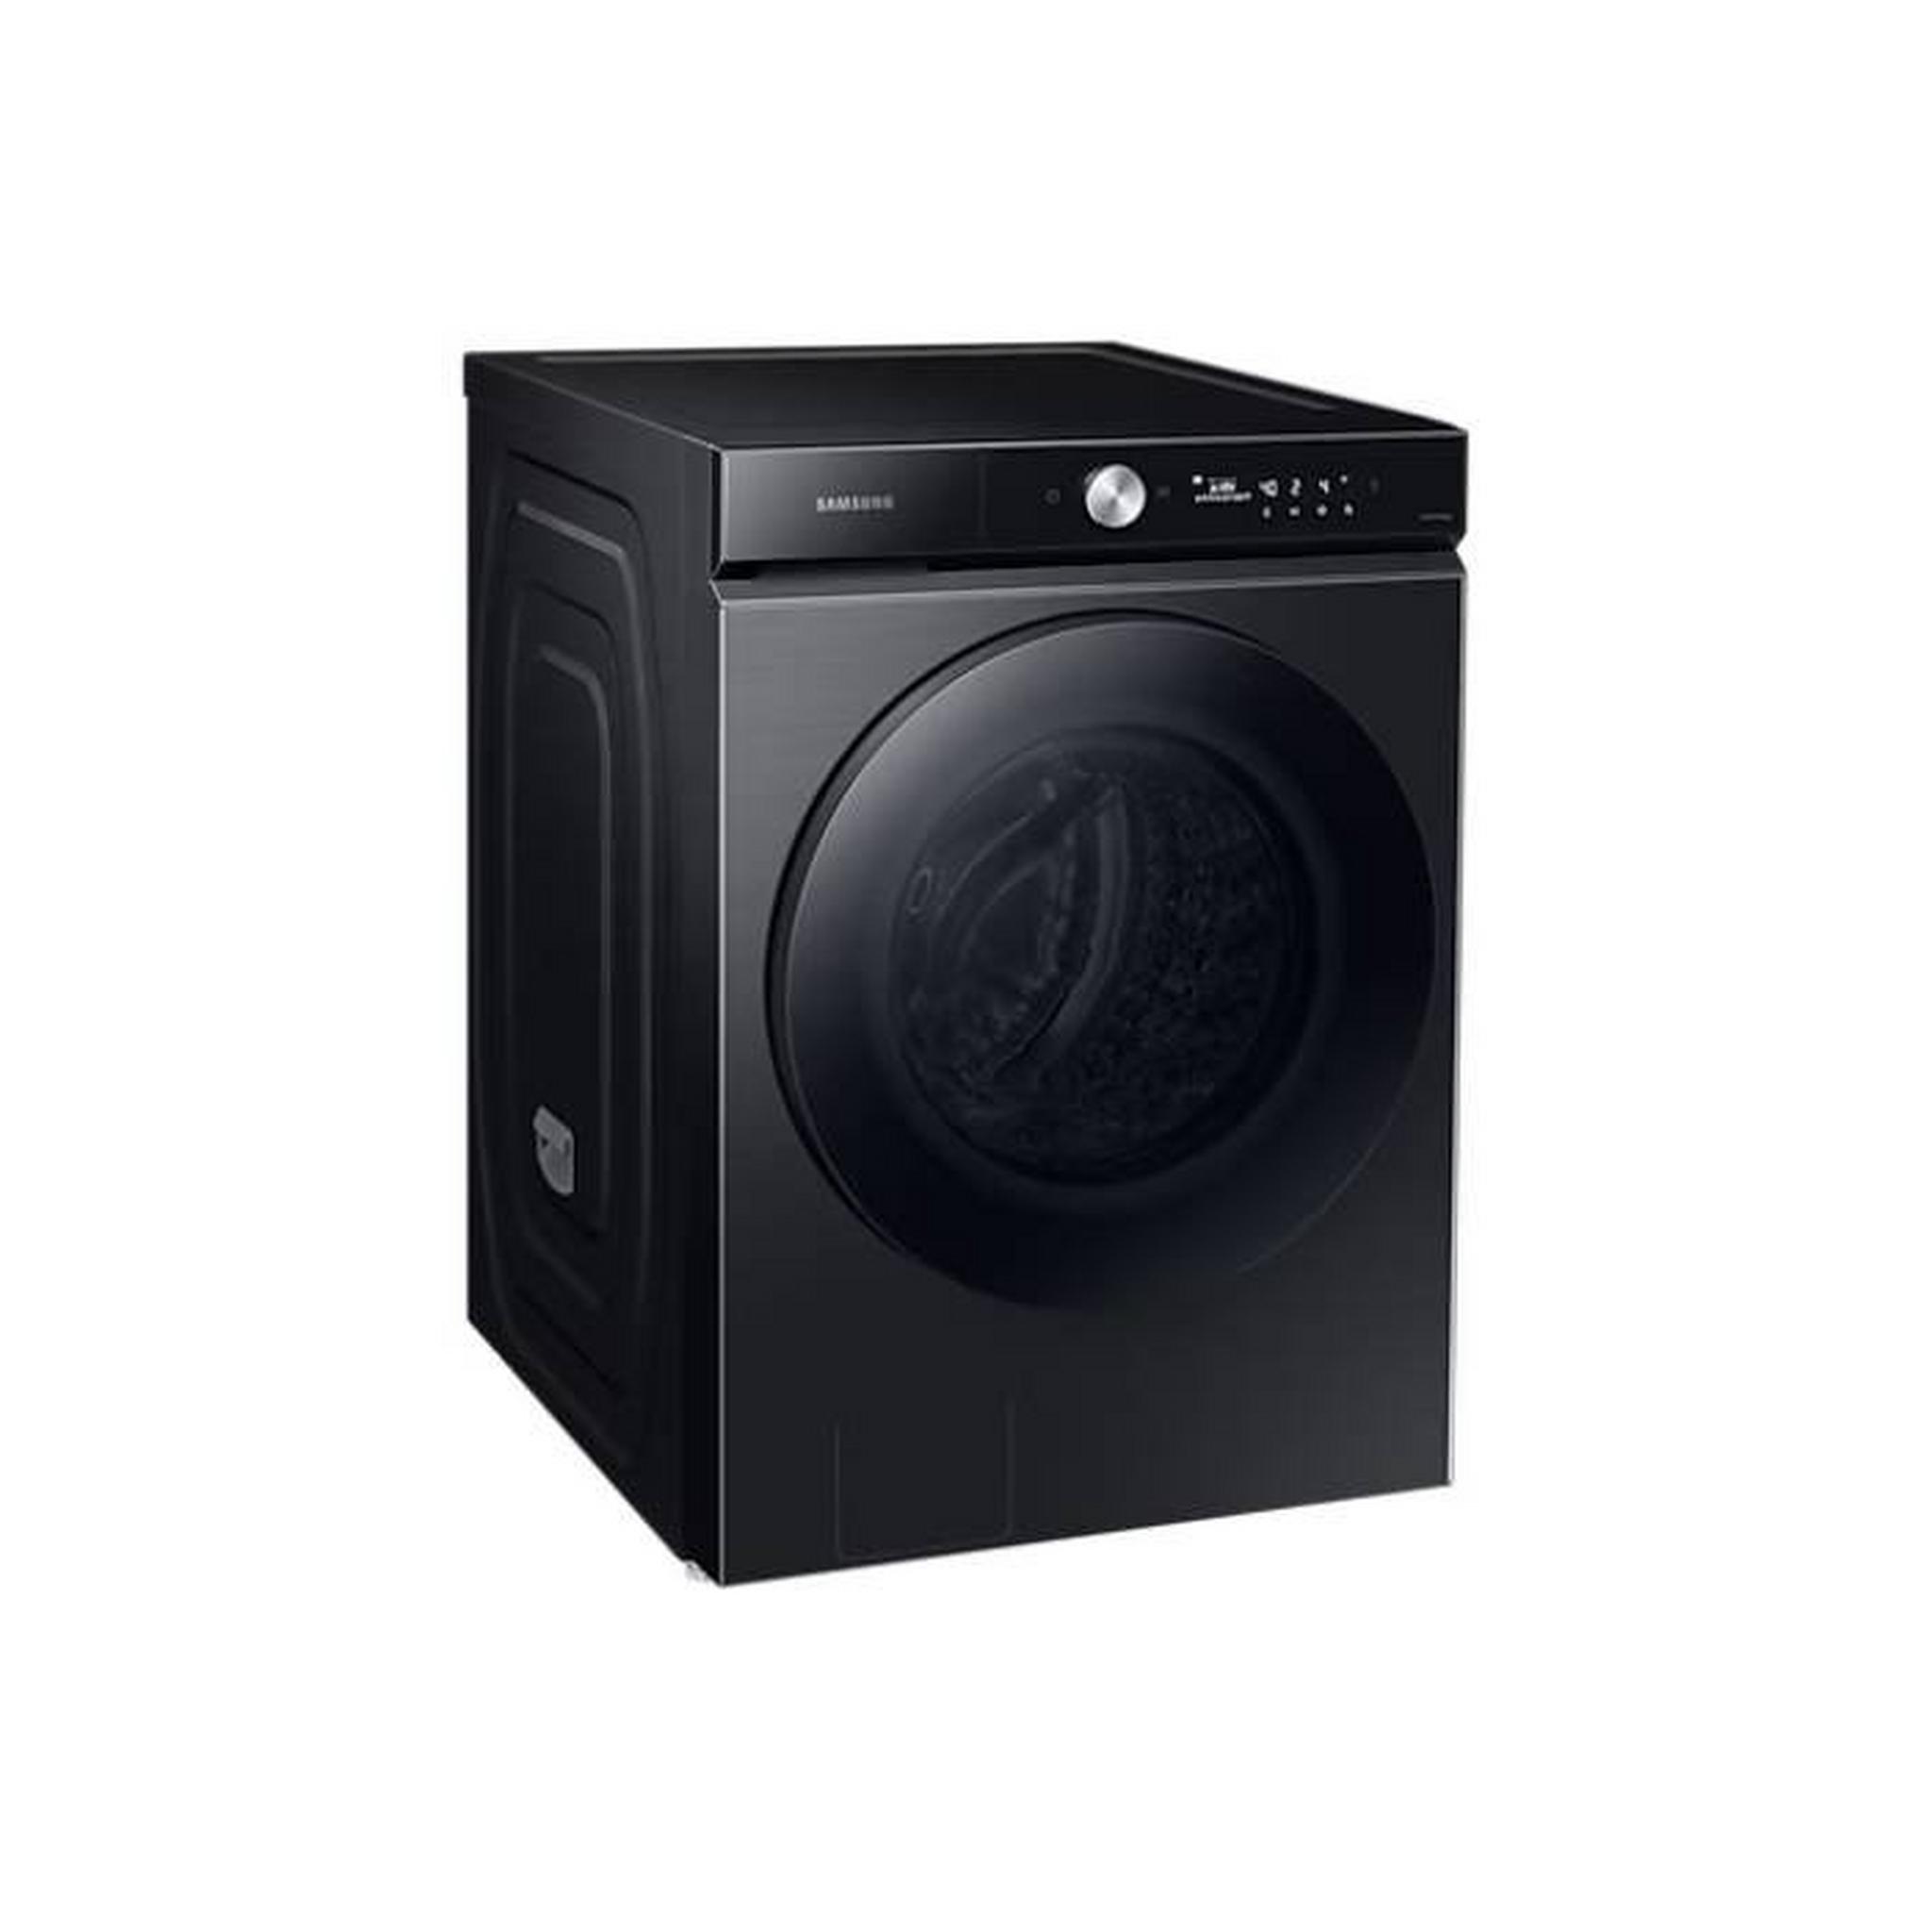 Samsung Front Load Washer Dryer, 21 KG Washing Capacity, 12 KG Drying Capacity, WD21B6400KV – Black